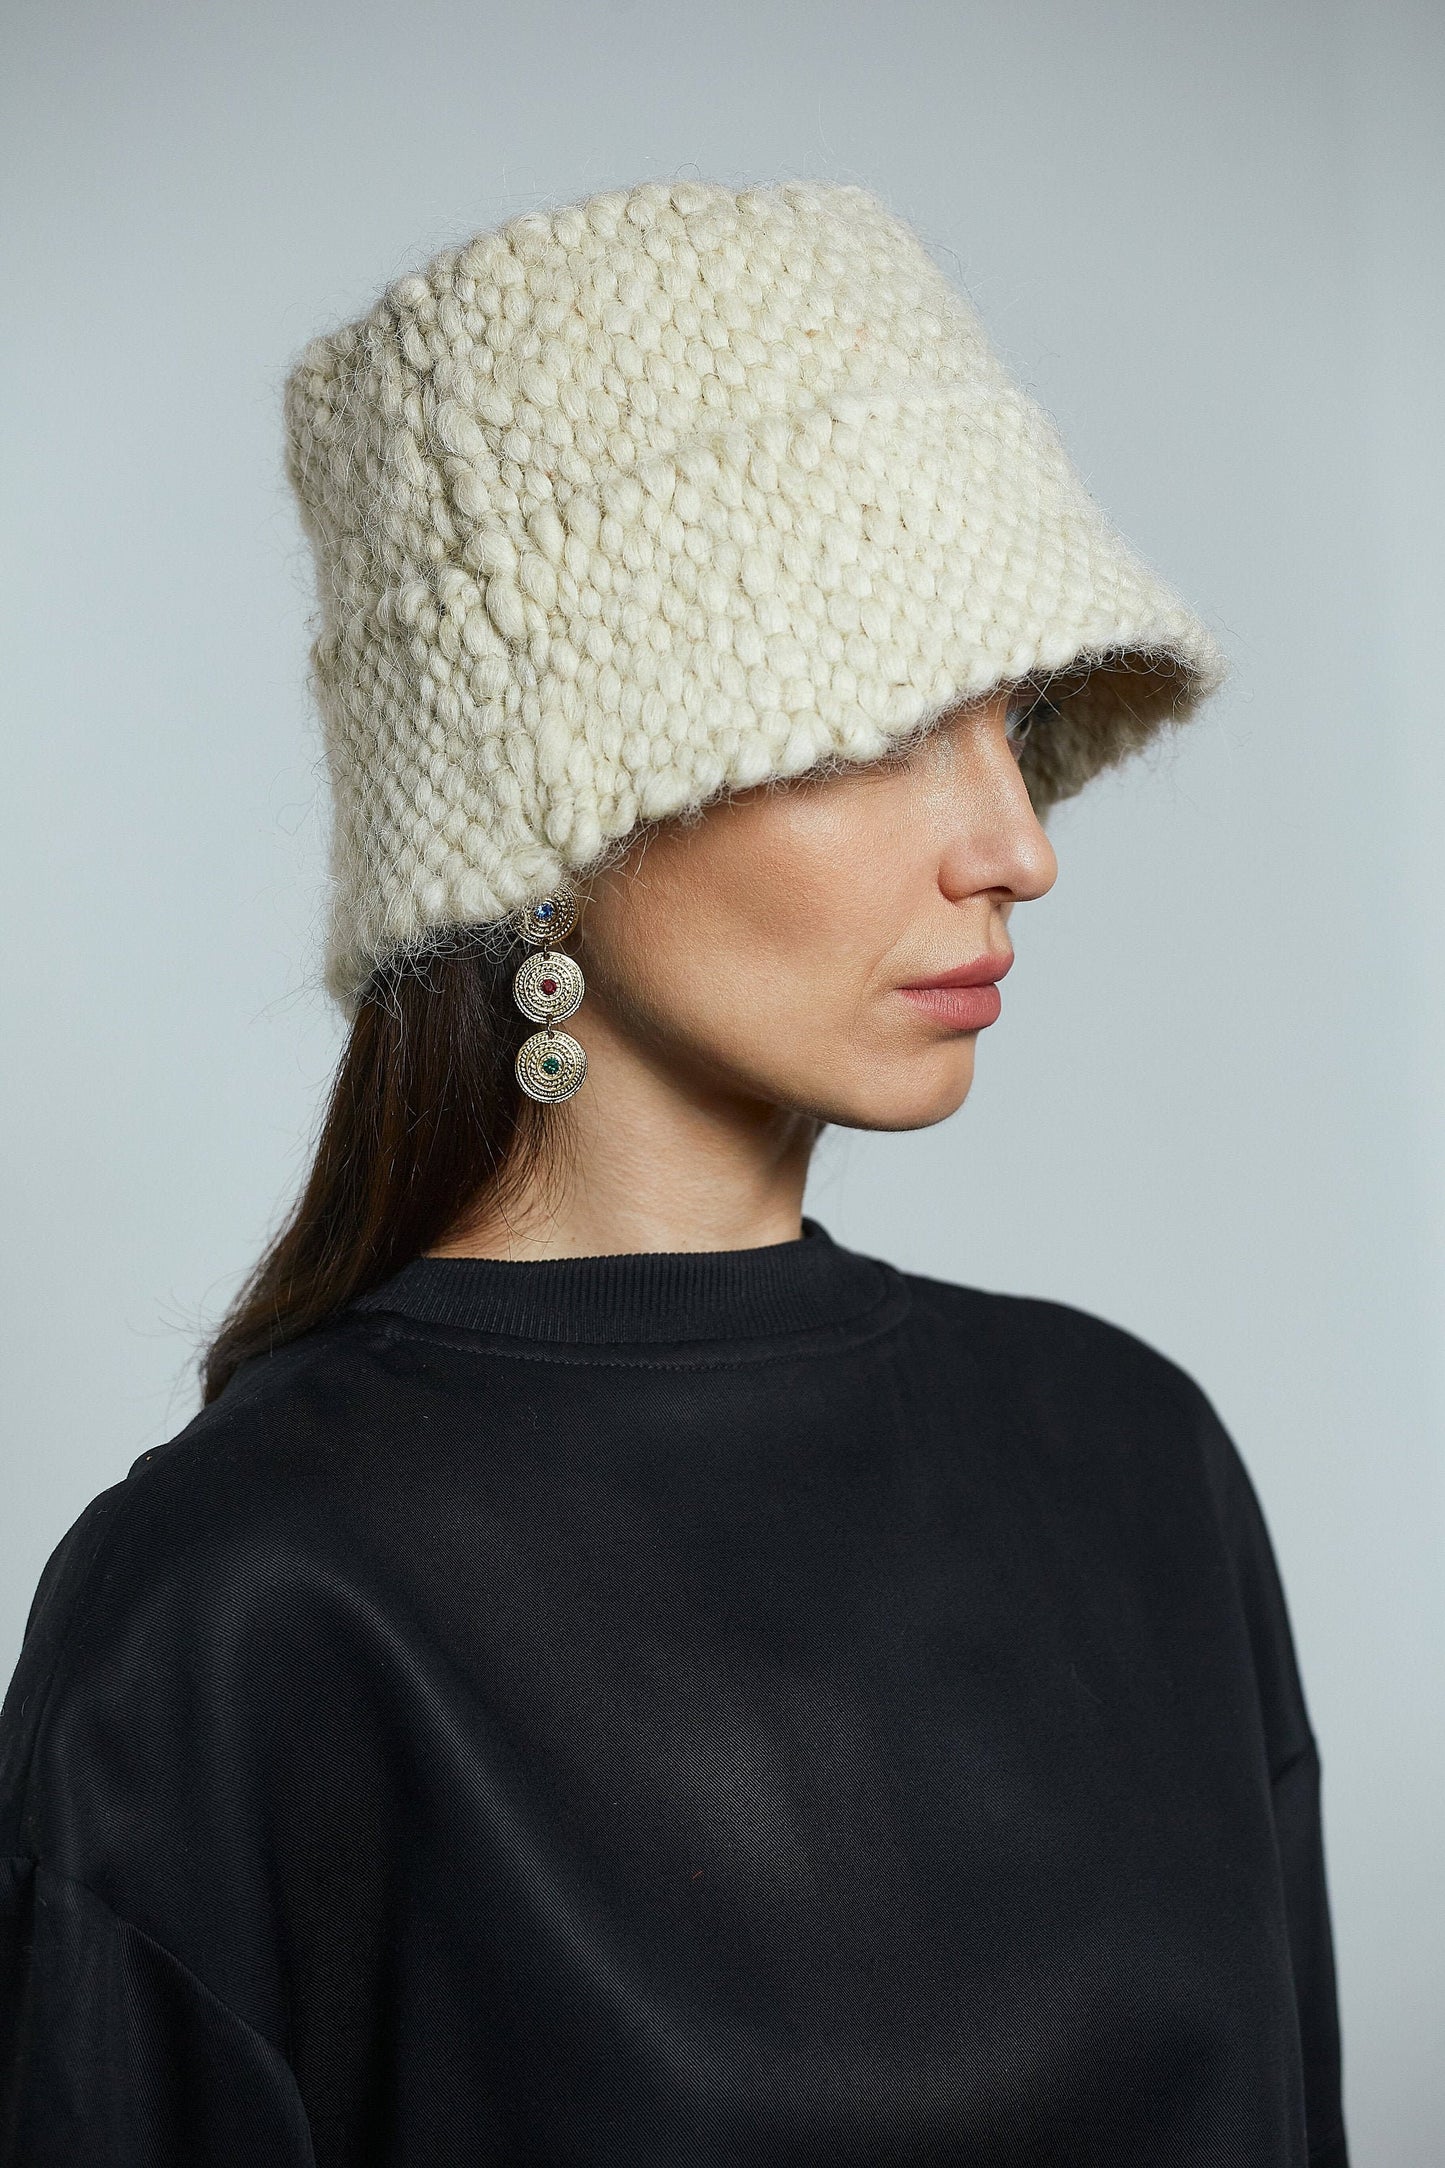 White wool hat